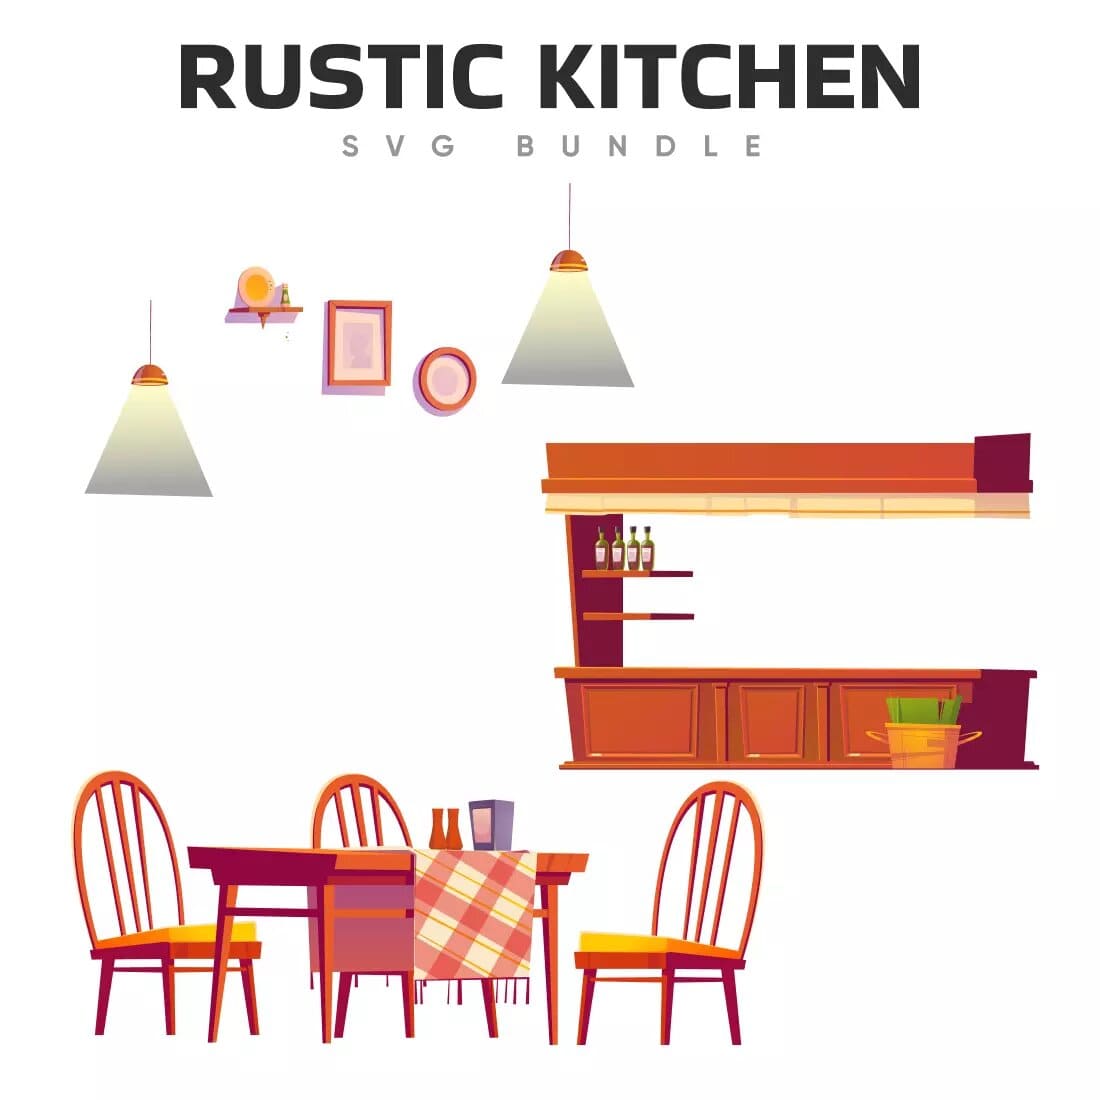 Rustic Kitchen SVG Bundle Preview 3.